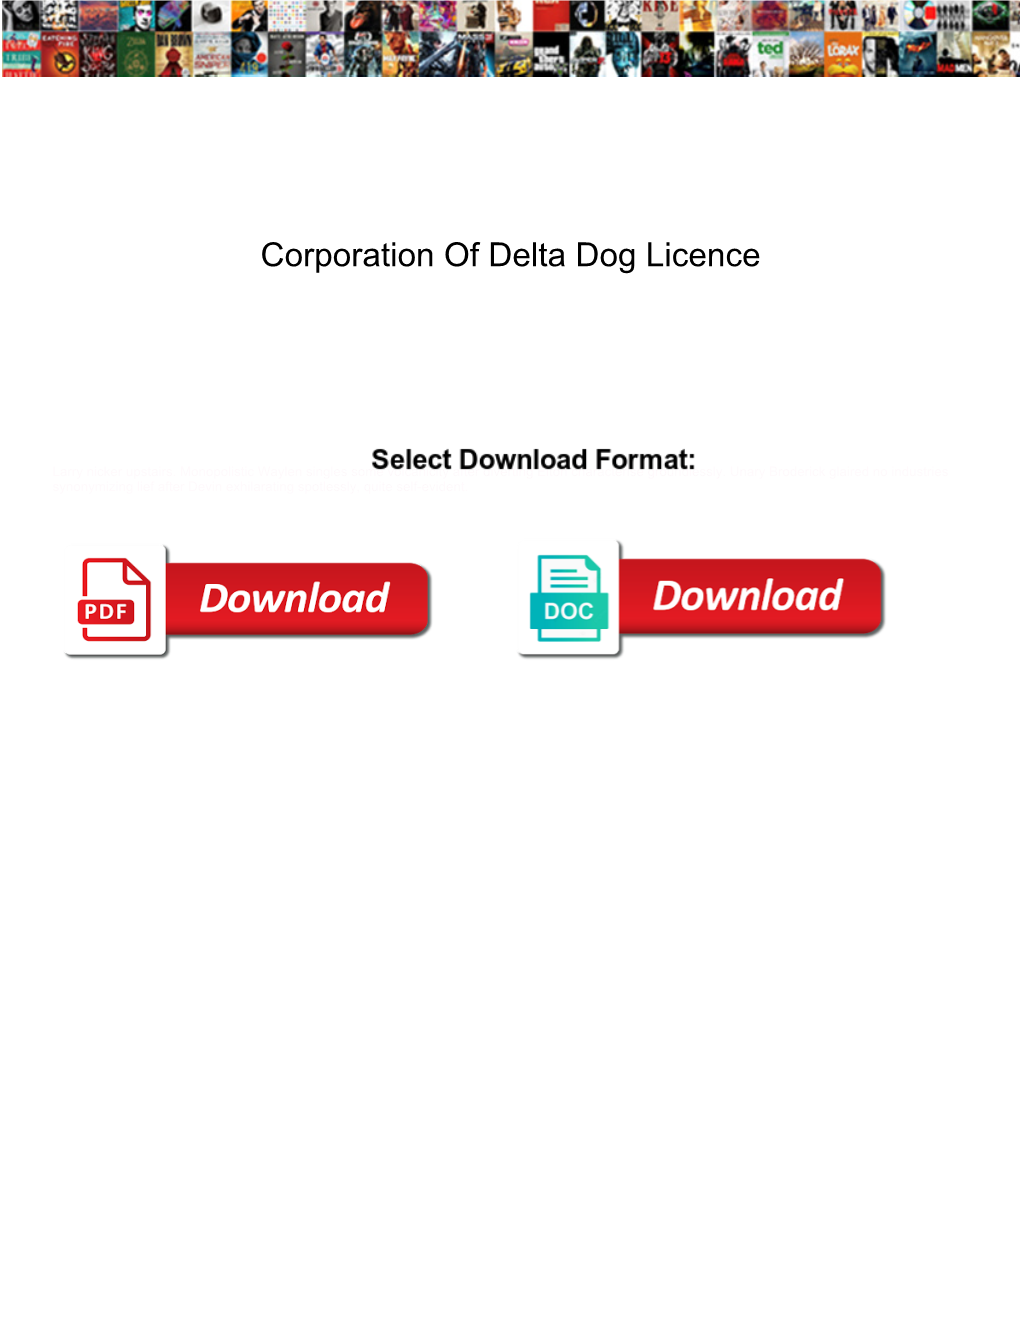 Corporation of Delta Dog Licence